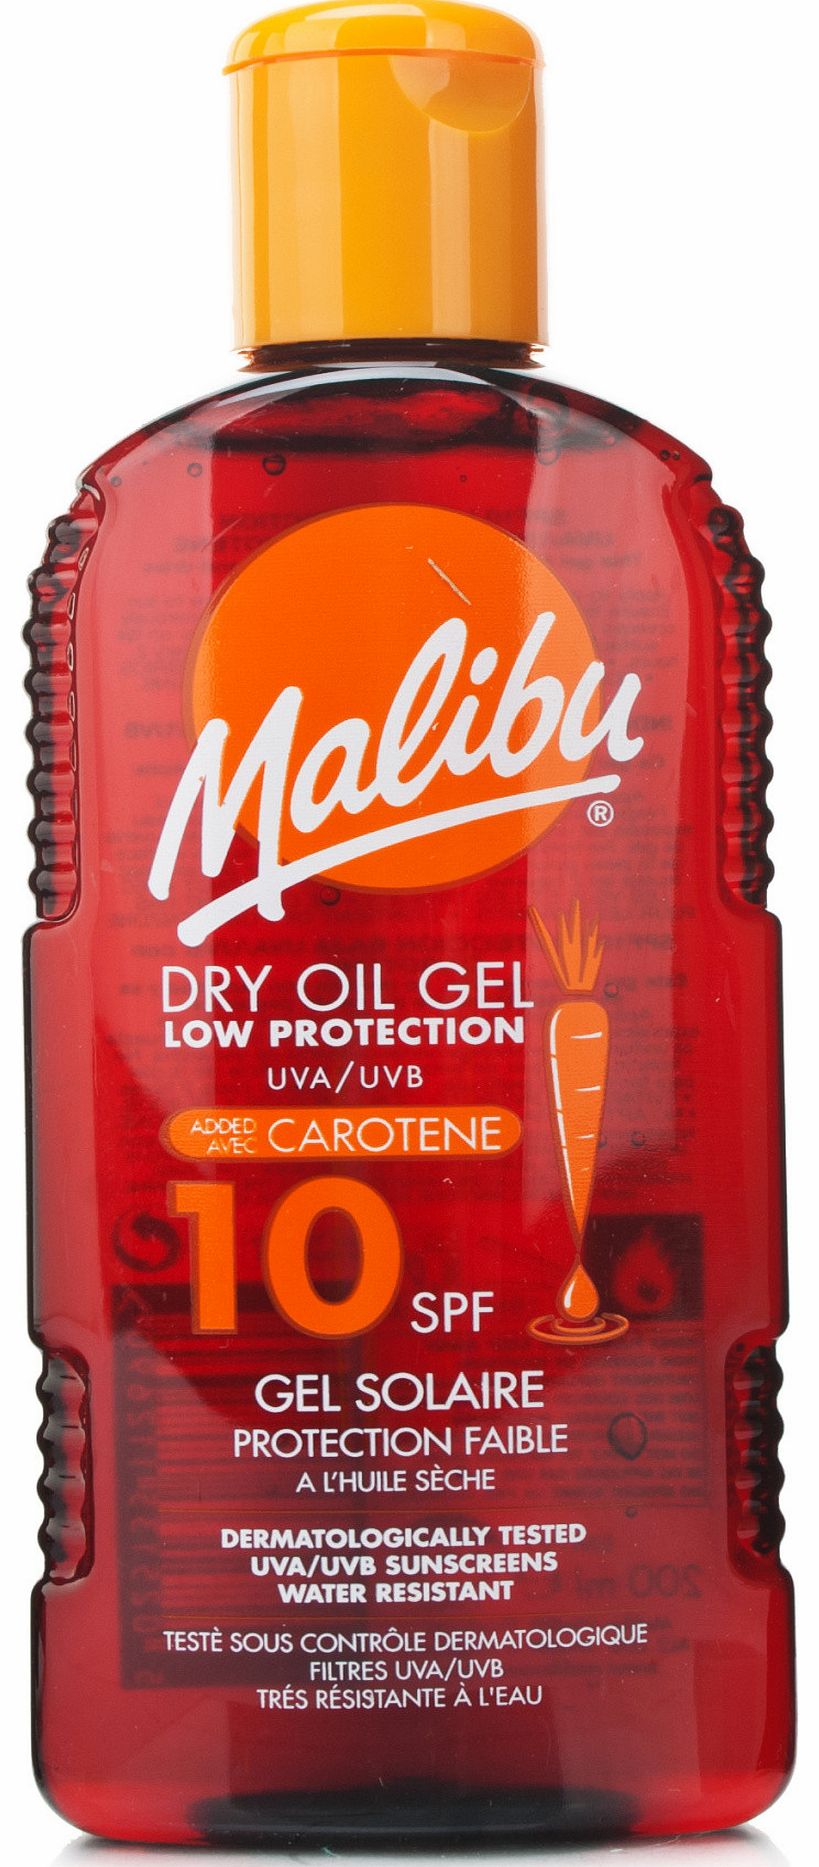 Malibu Dry Oil Gel with Carotene SPF10